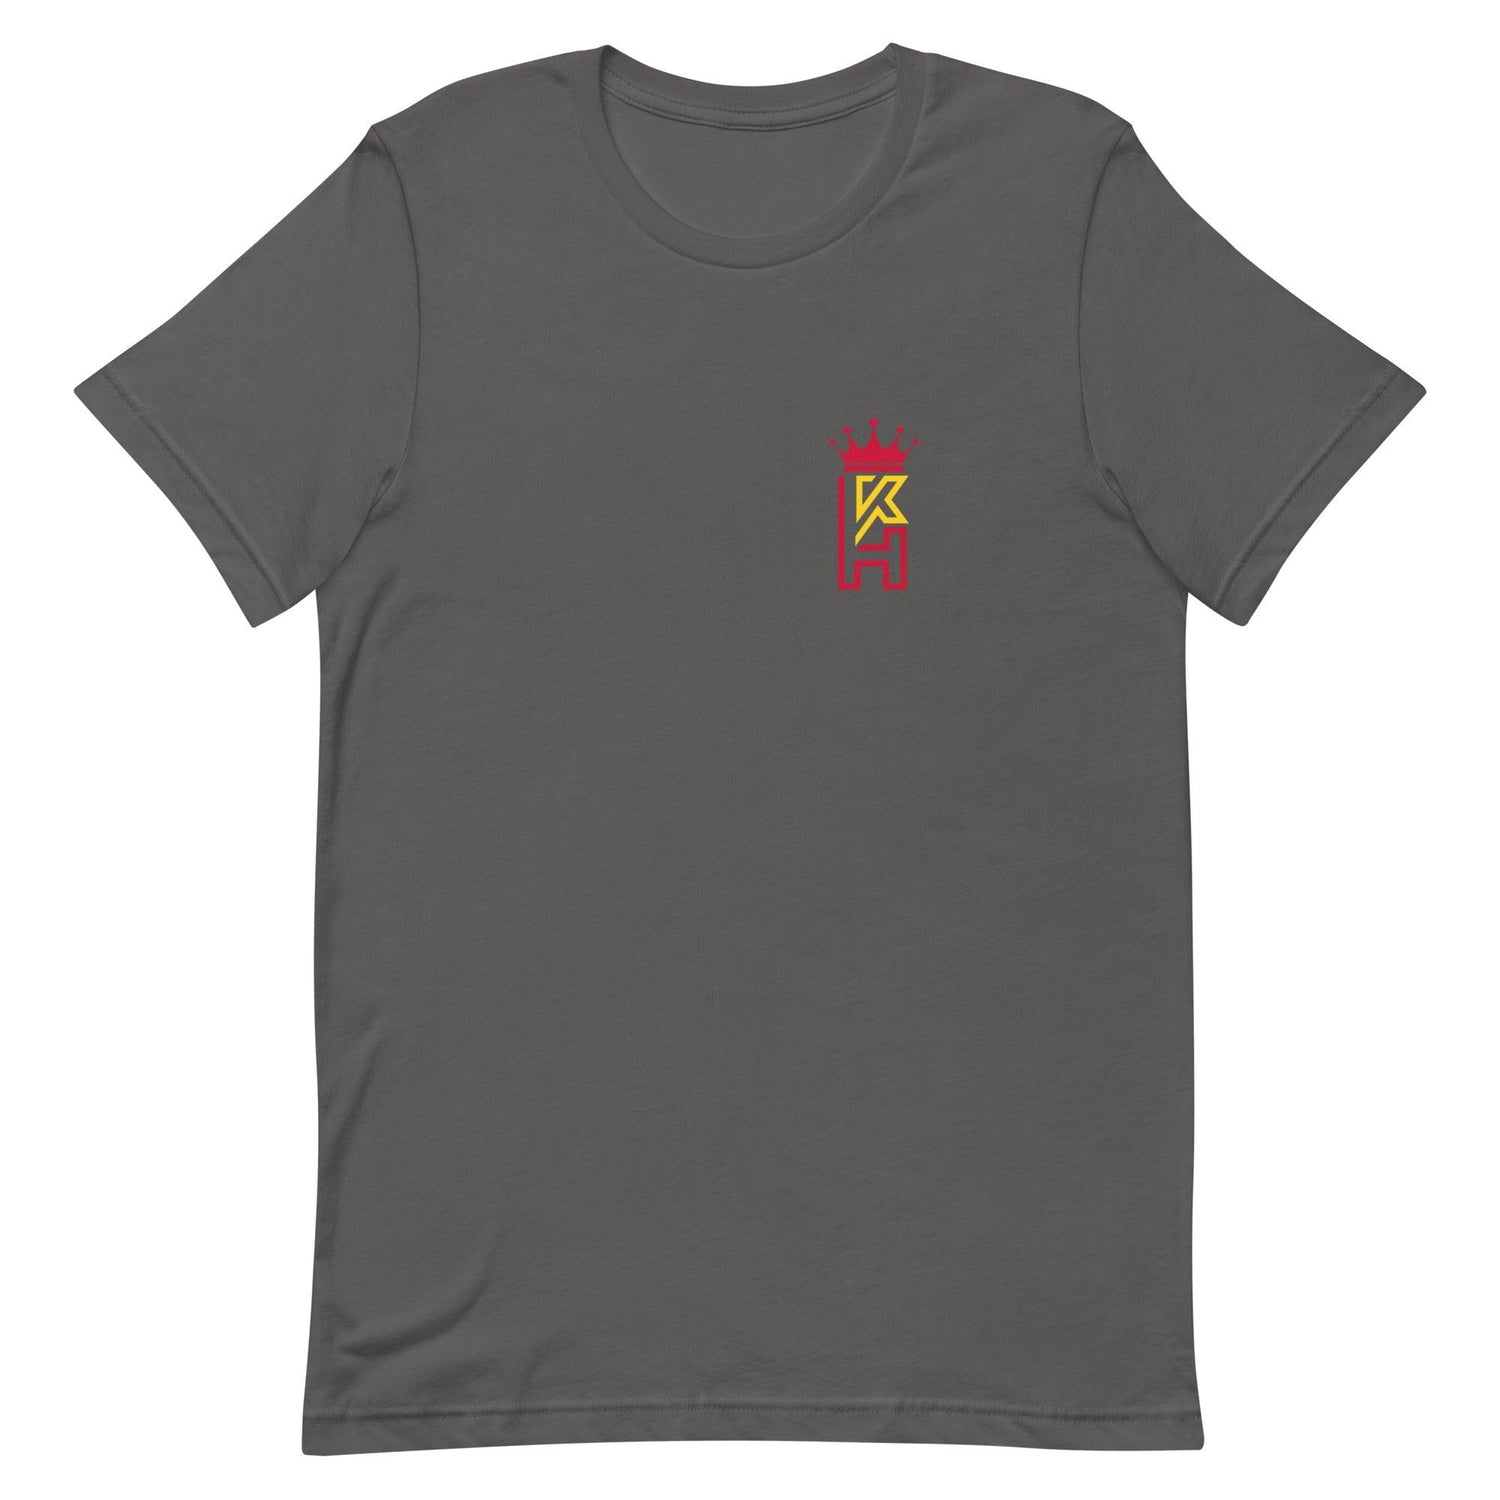 Keiondre Hall “Elite” t-shirt - Fan Arch